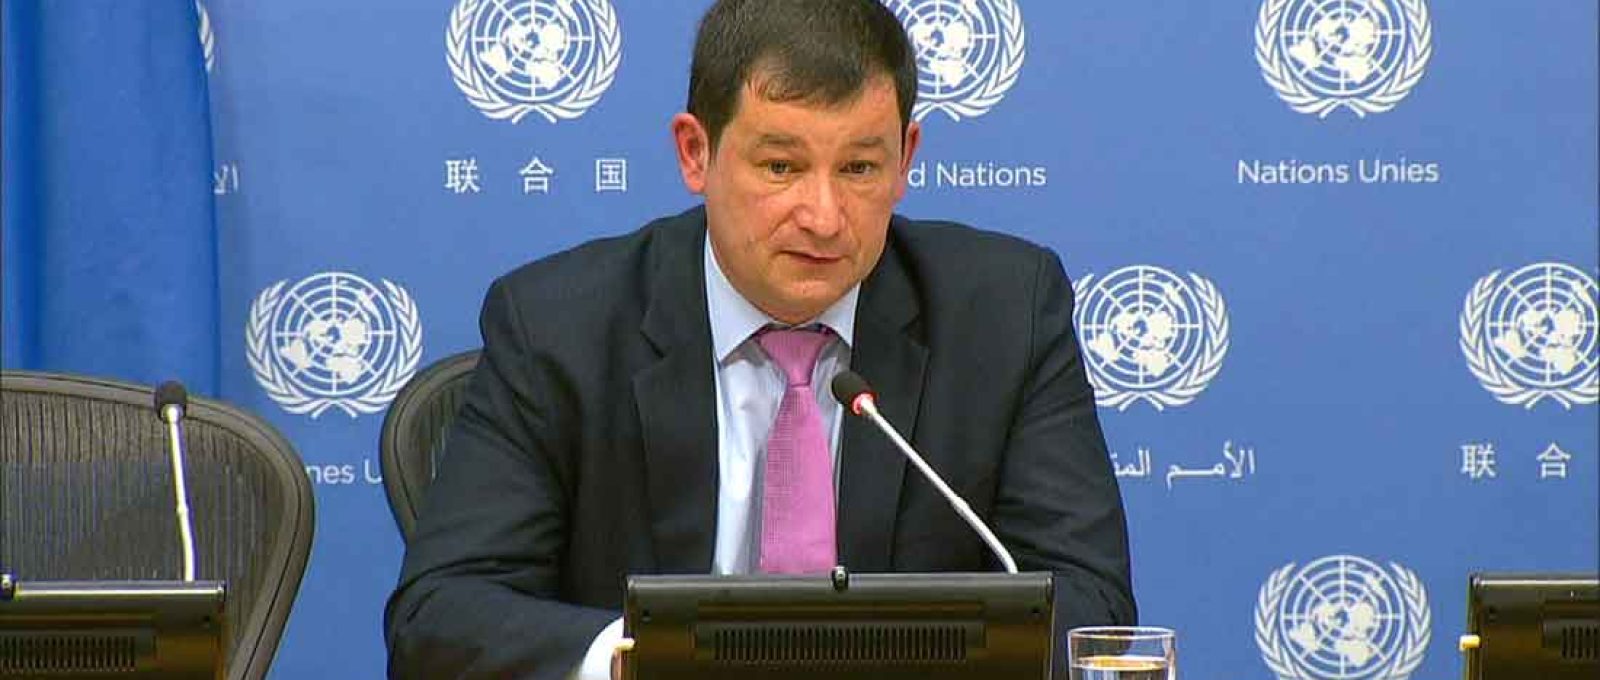 O diplomata russo Dmitry Polyanskiy, Primeiro Representante Permanente Adjunto da Rússia na ONU (Foto: UNIFEED/ONU).